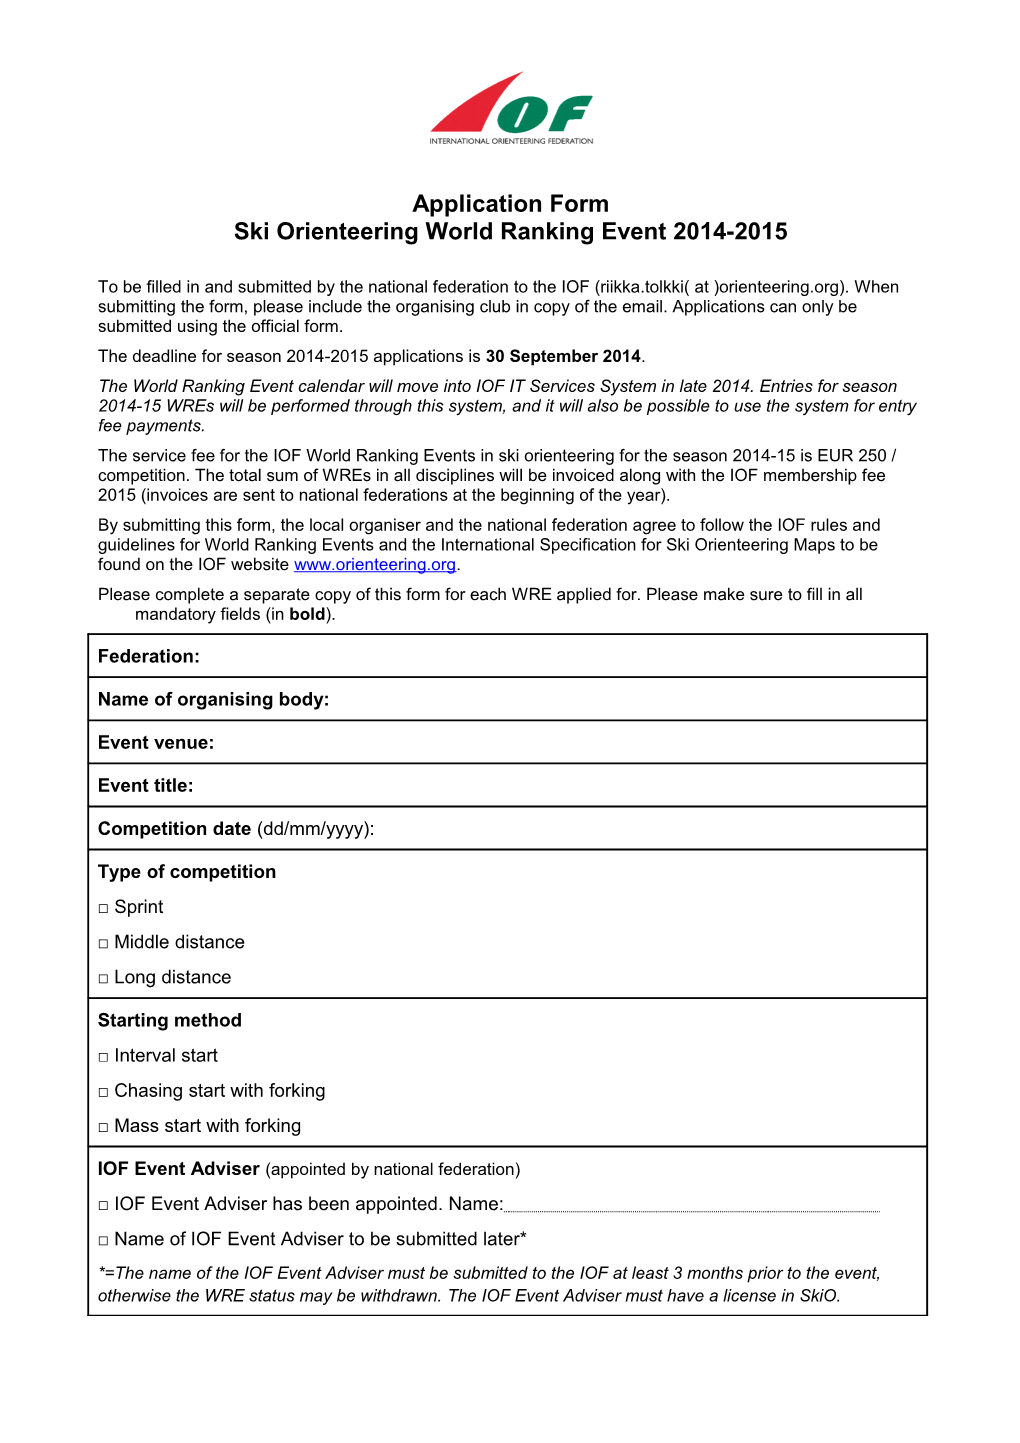 Application Form Ski Orienteering World Ranking Event 2014-2015